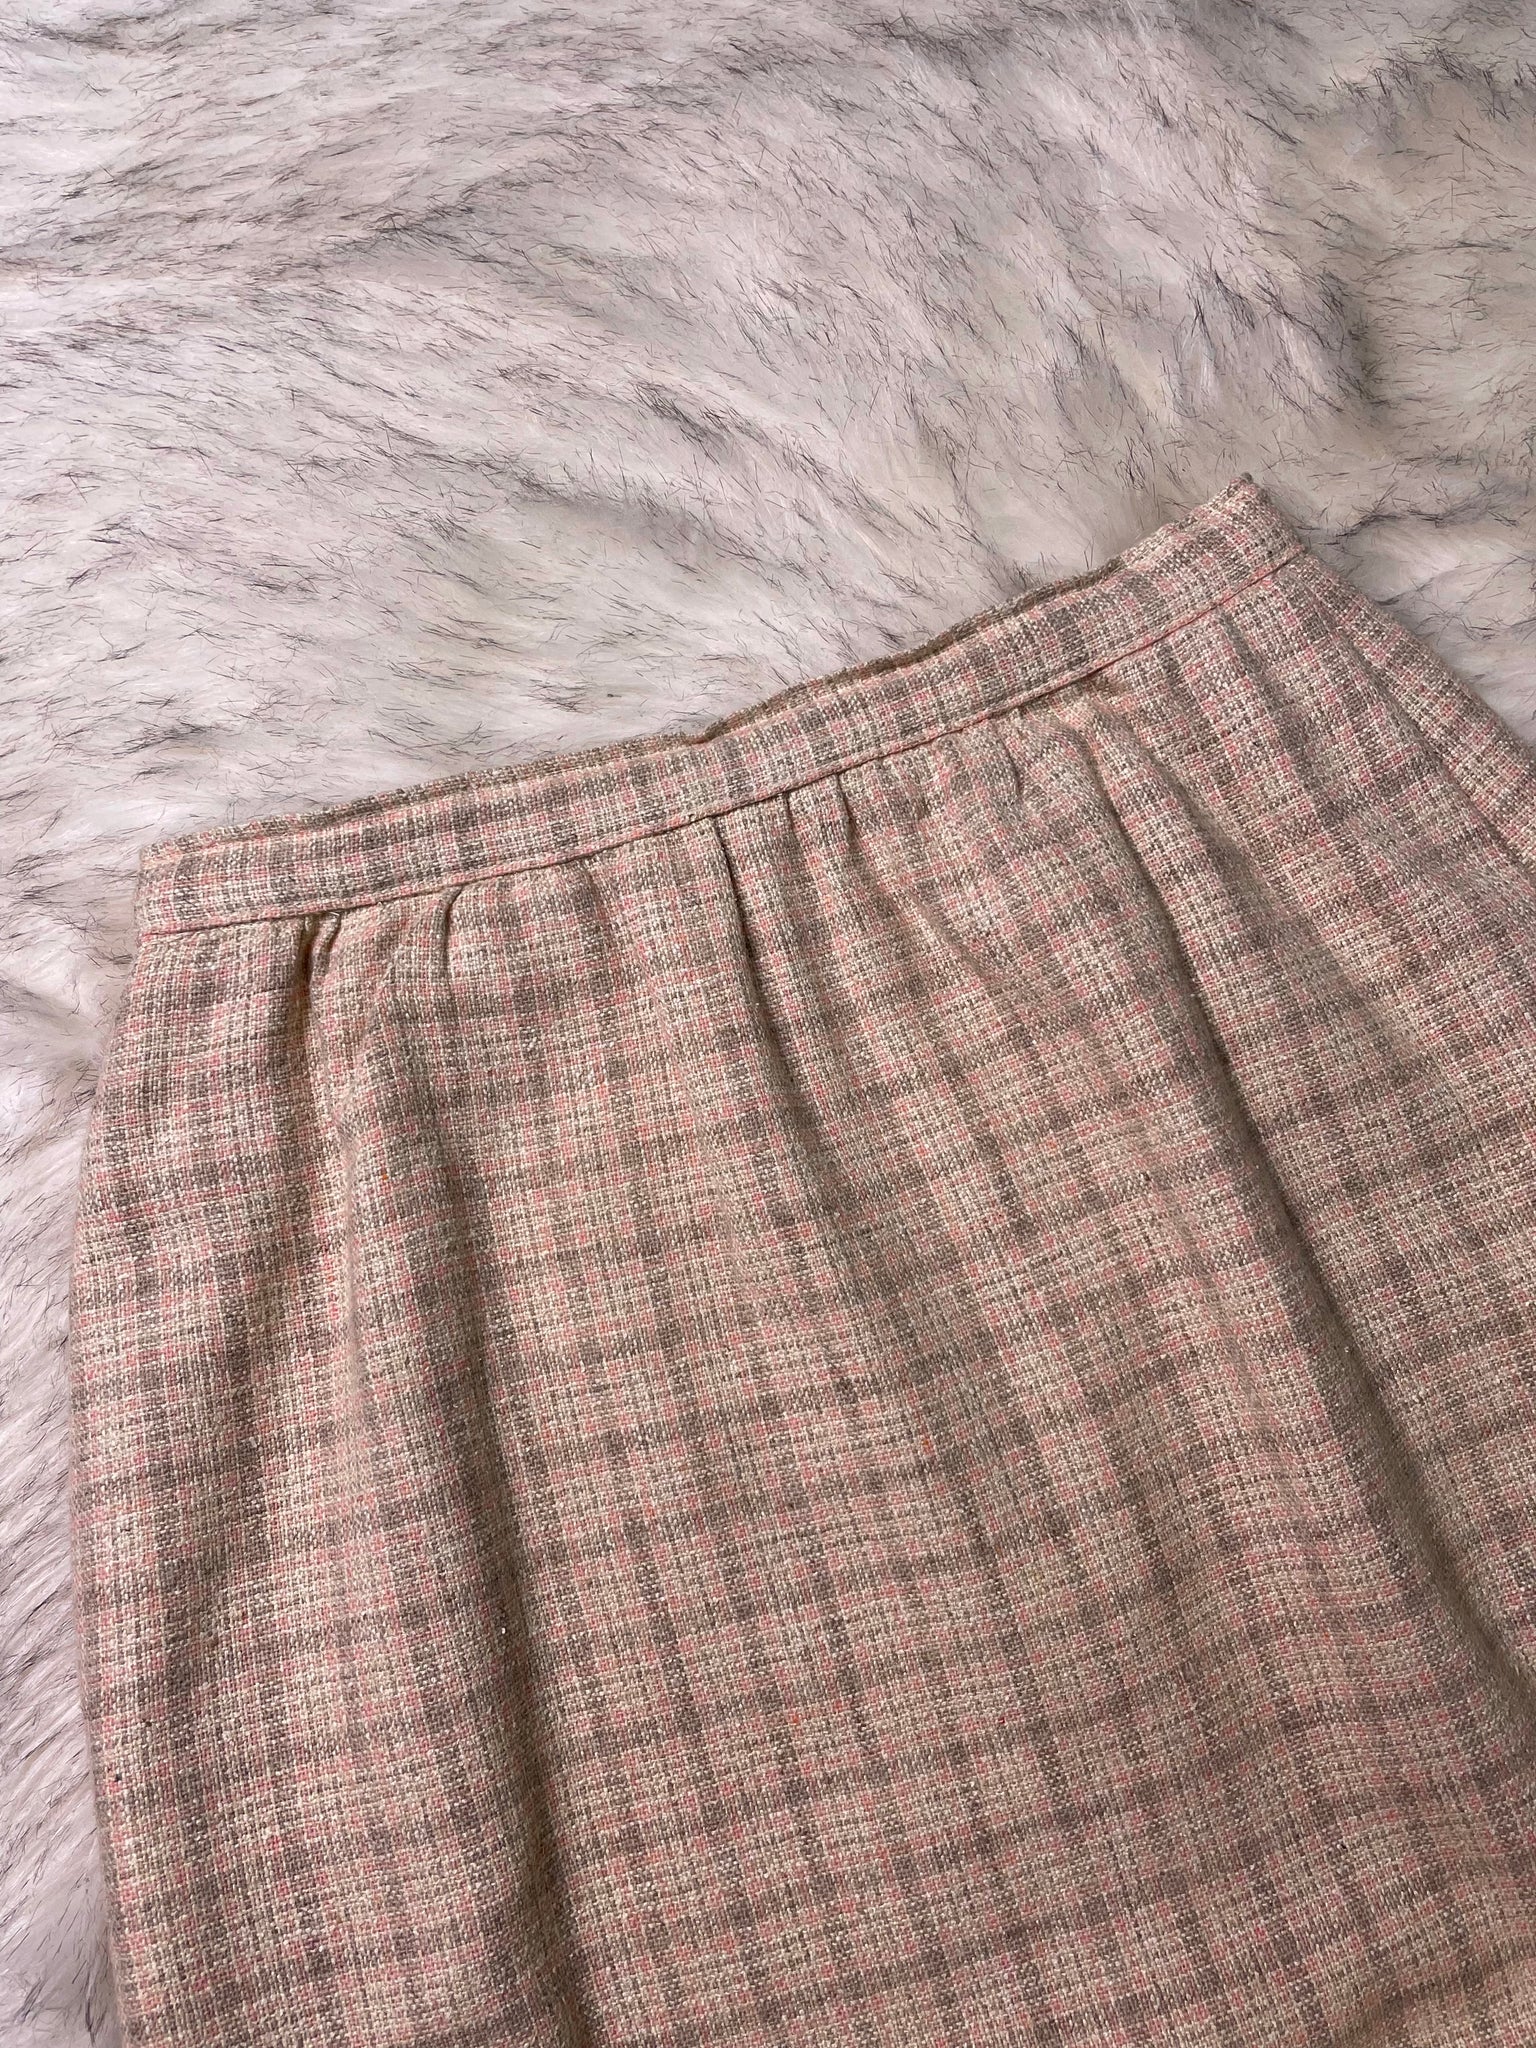 60s homemade plaid skirt, Size 4